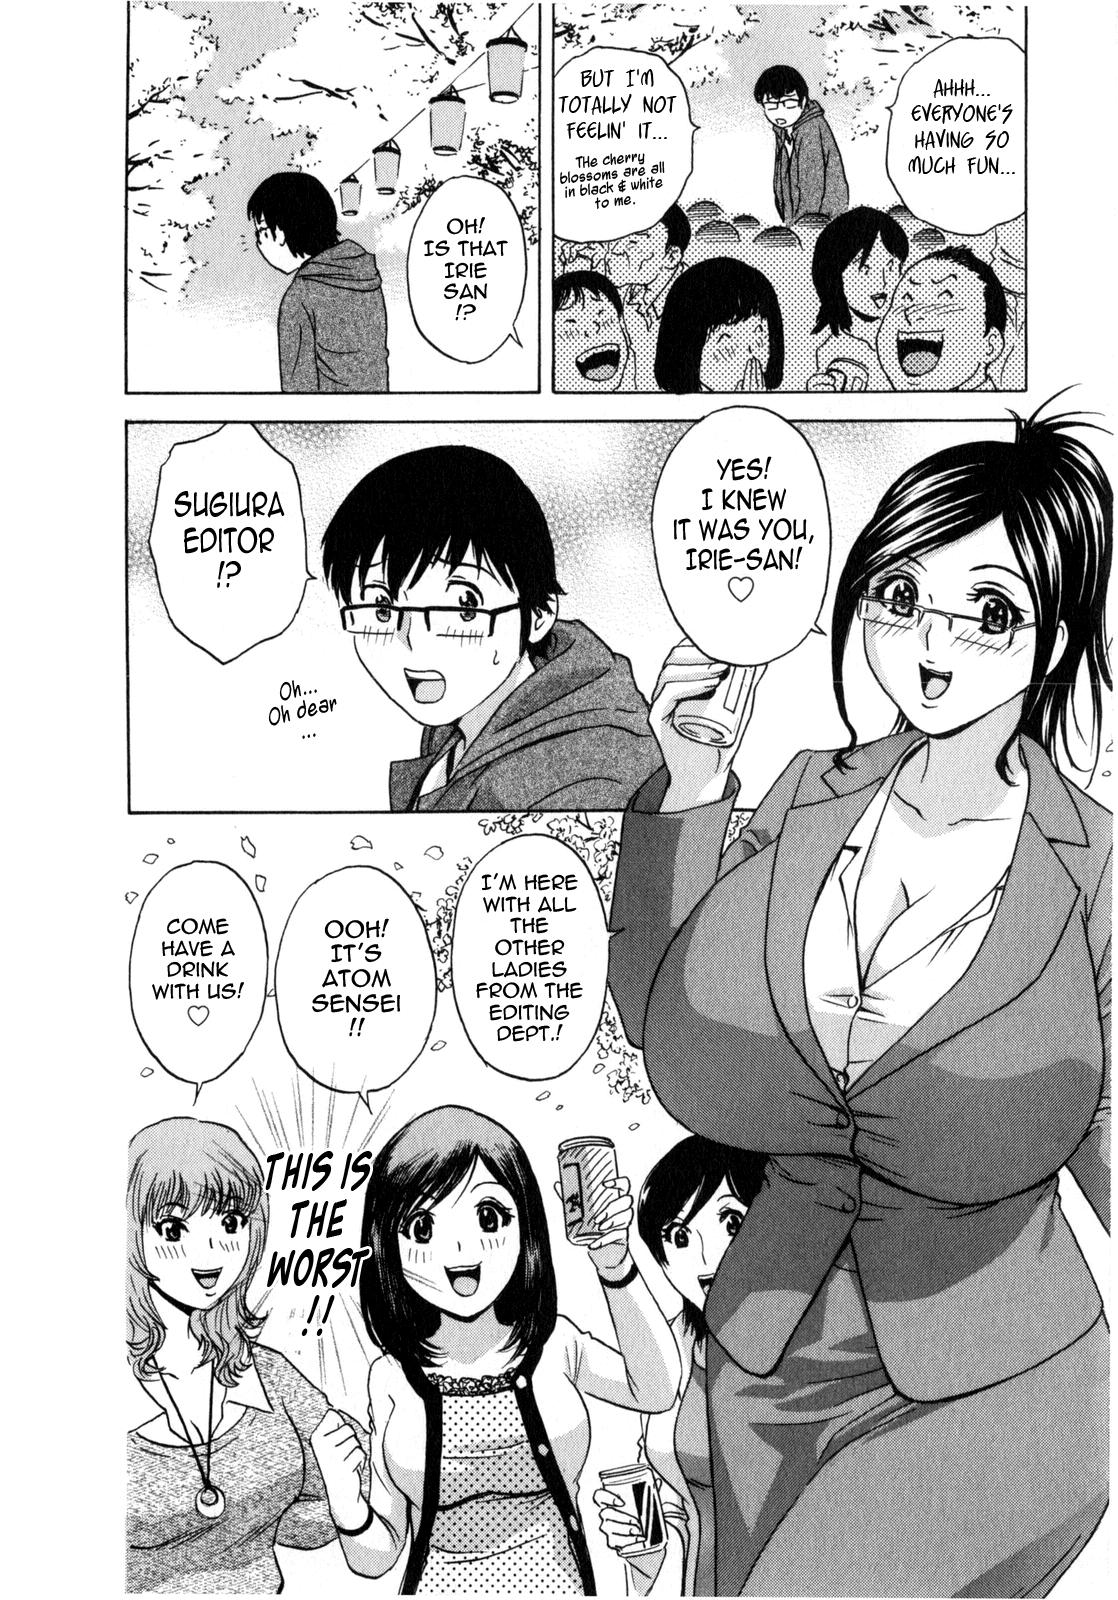 [Hidemaru] Life with Married Women Just Like a Manga 2 - Ch. 1-5 [English] {Tadanohito} 72